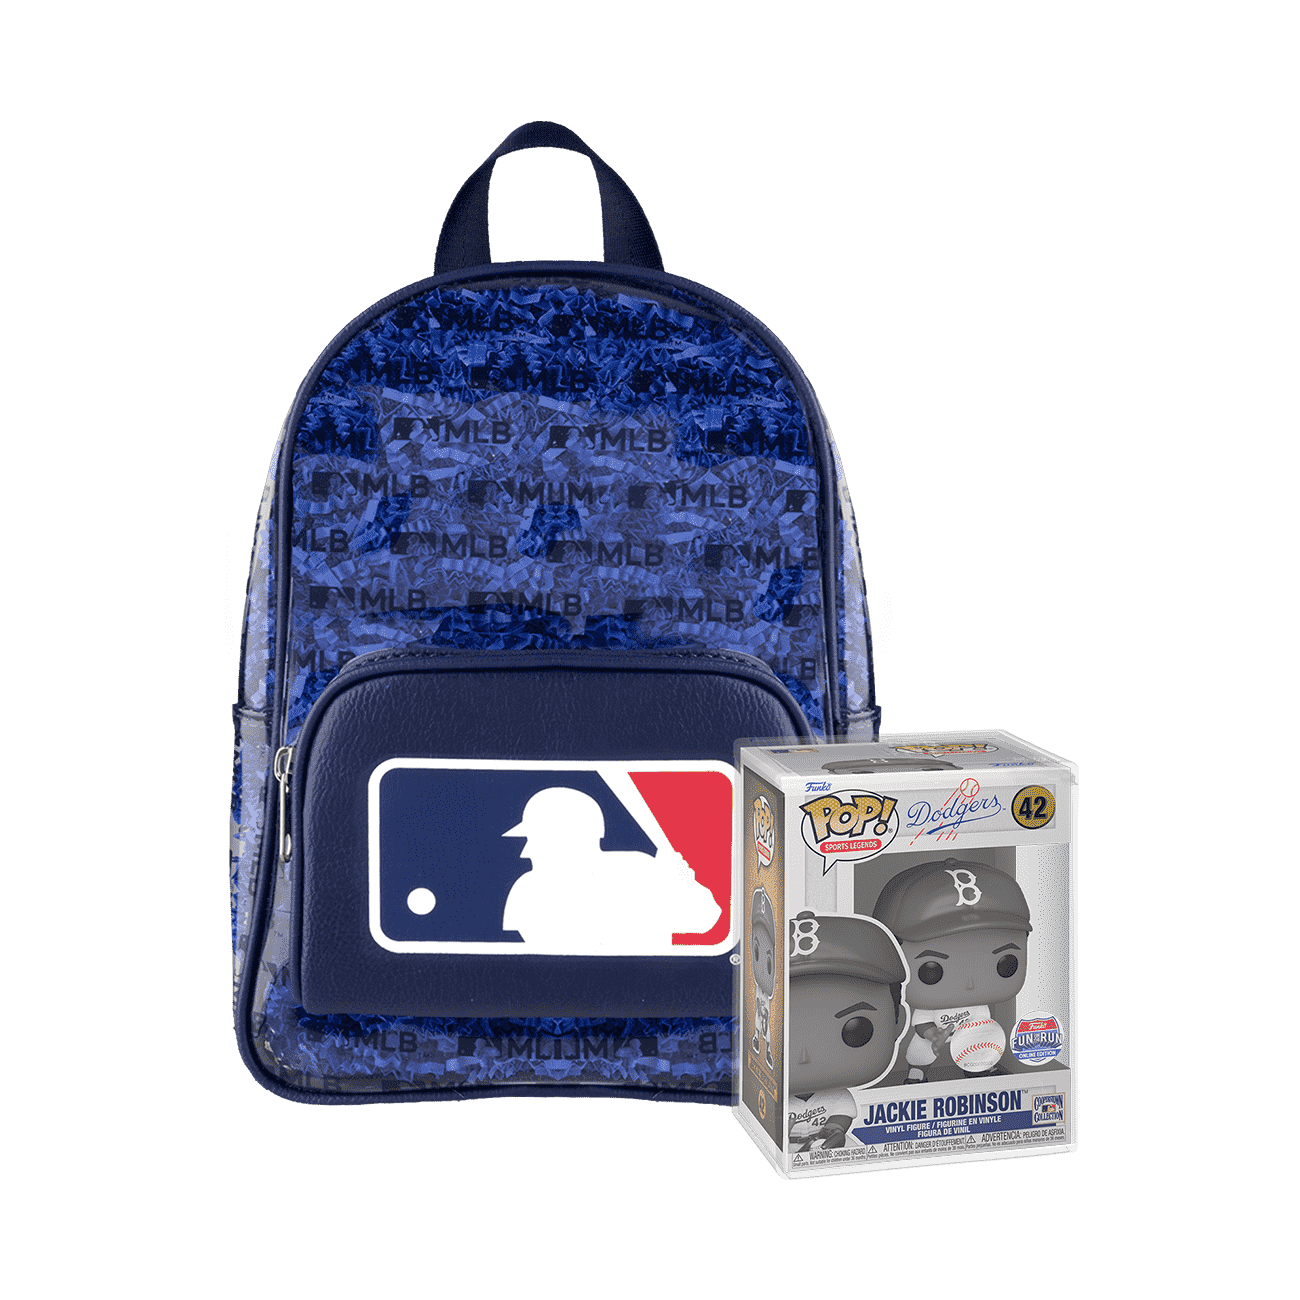 Funko Sports: MLB Stadium Mini Backpack and Pop! Jackie Robinson Limited Edition